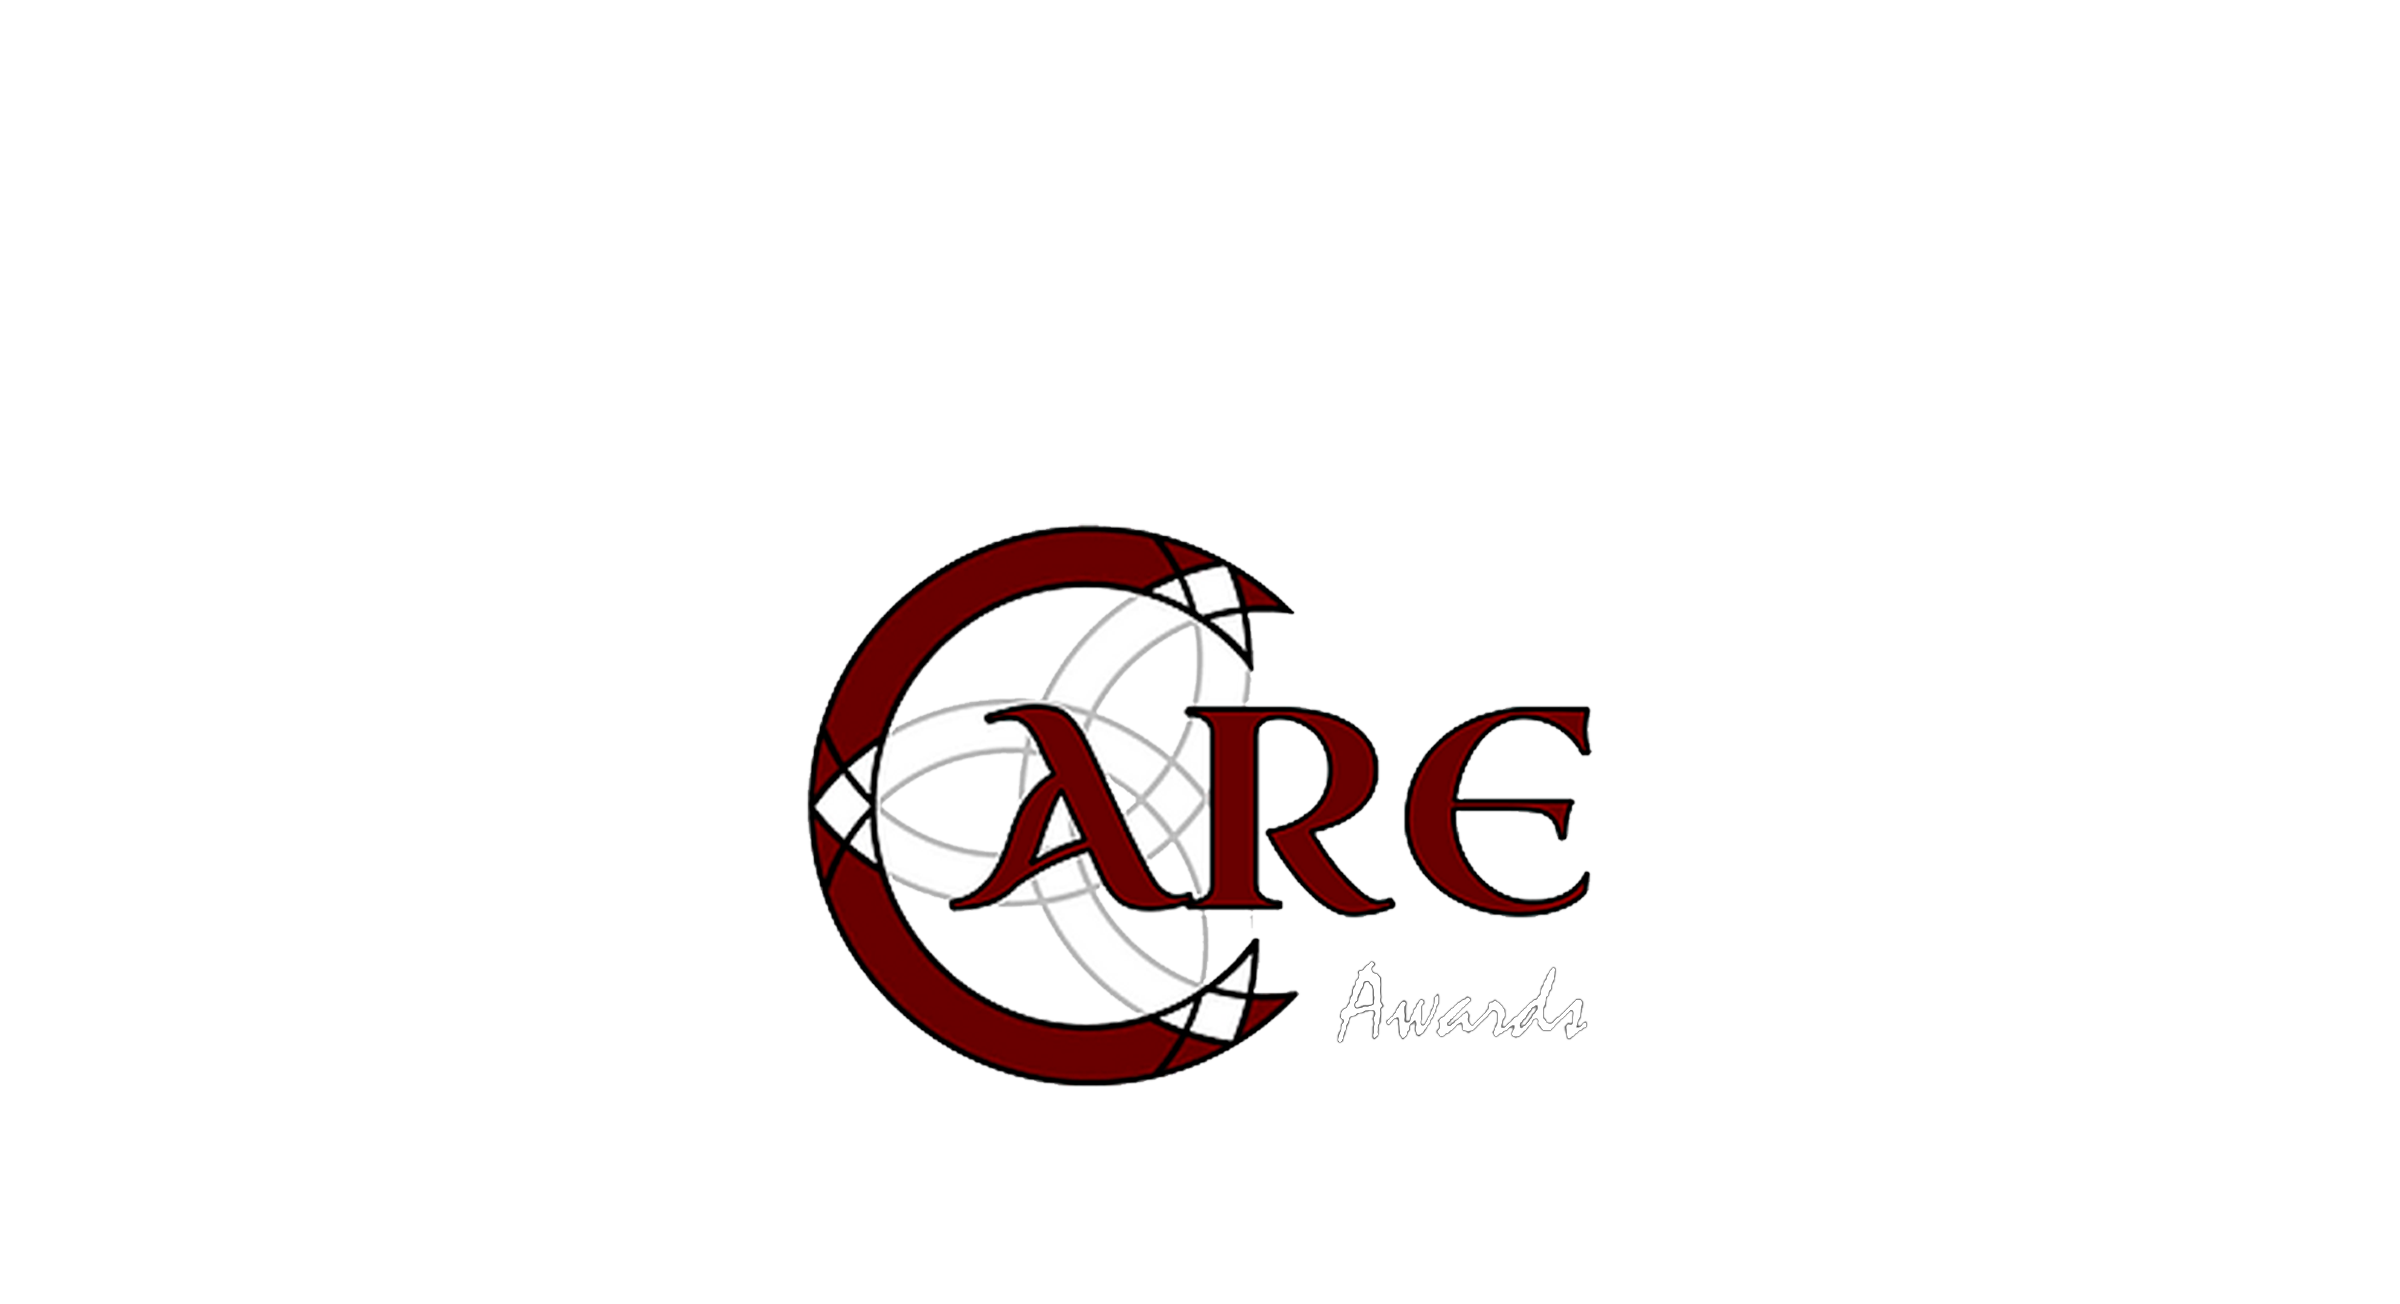 care award Documentary Short 2021